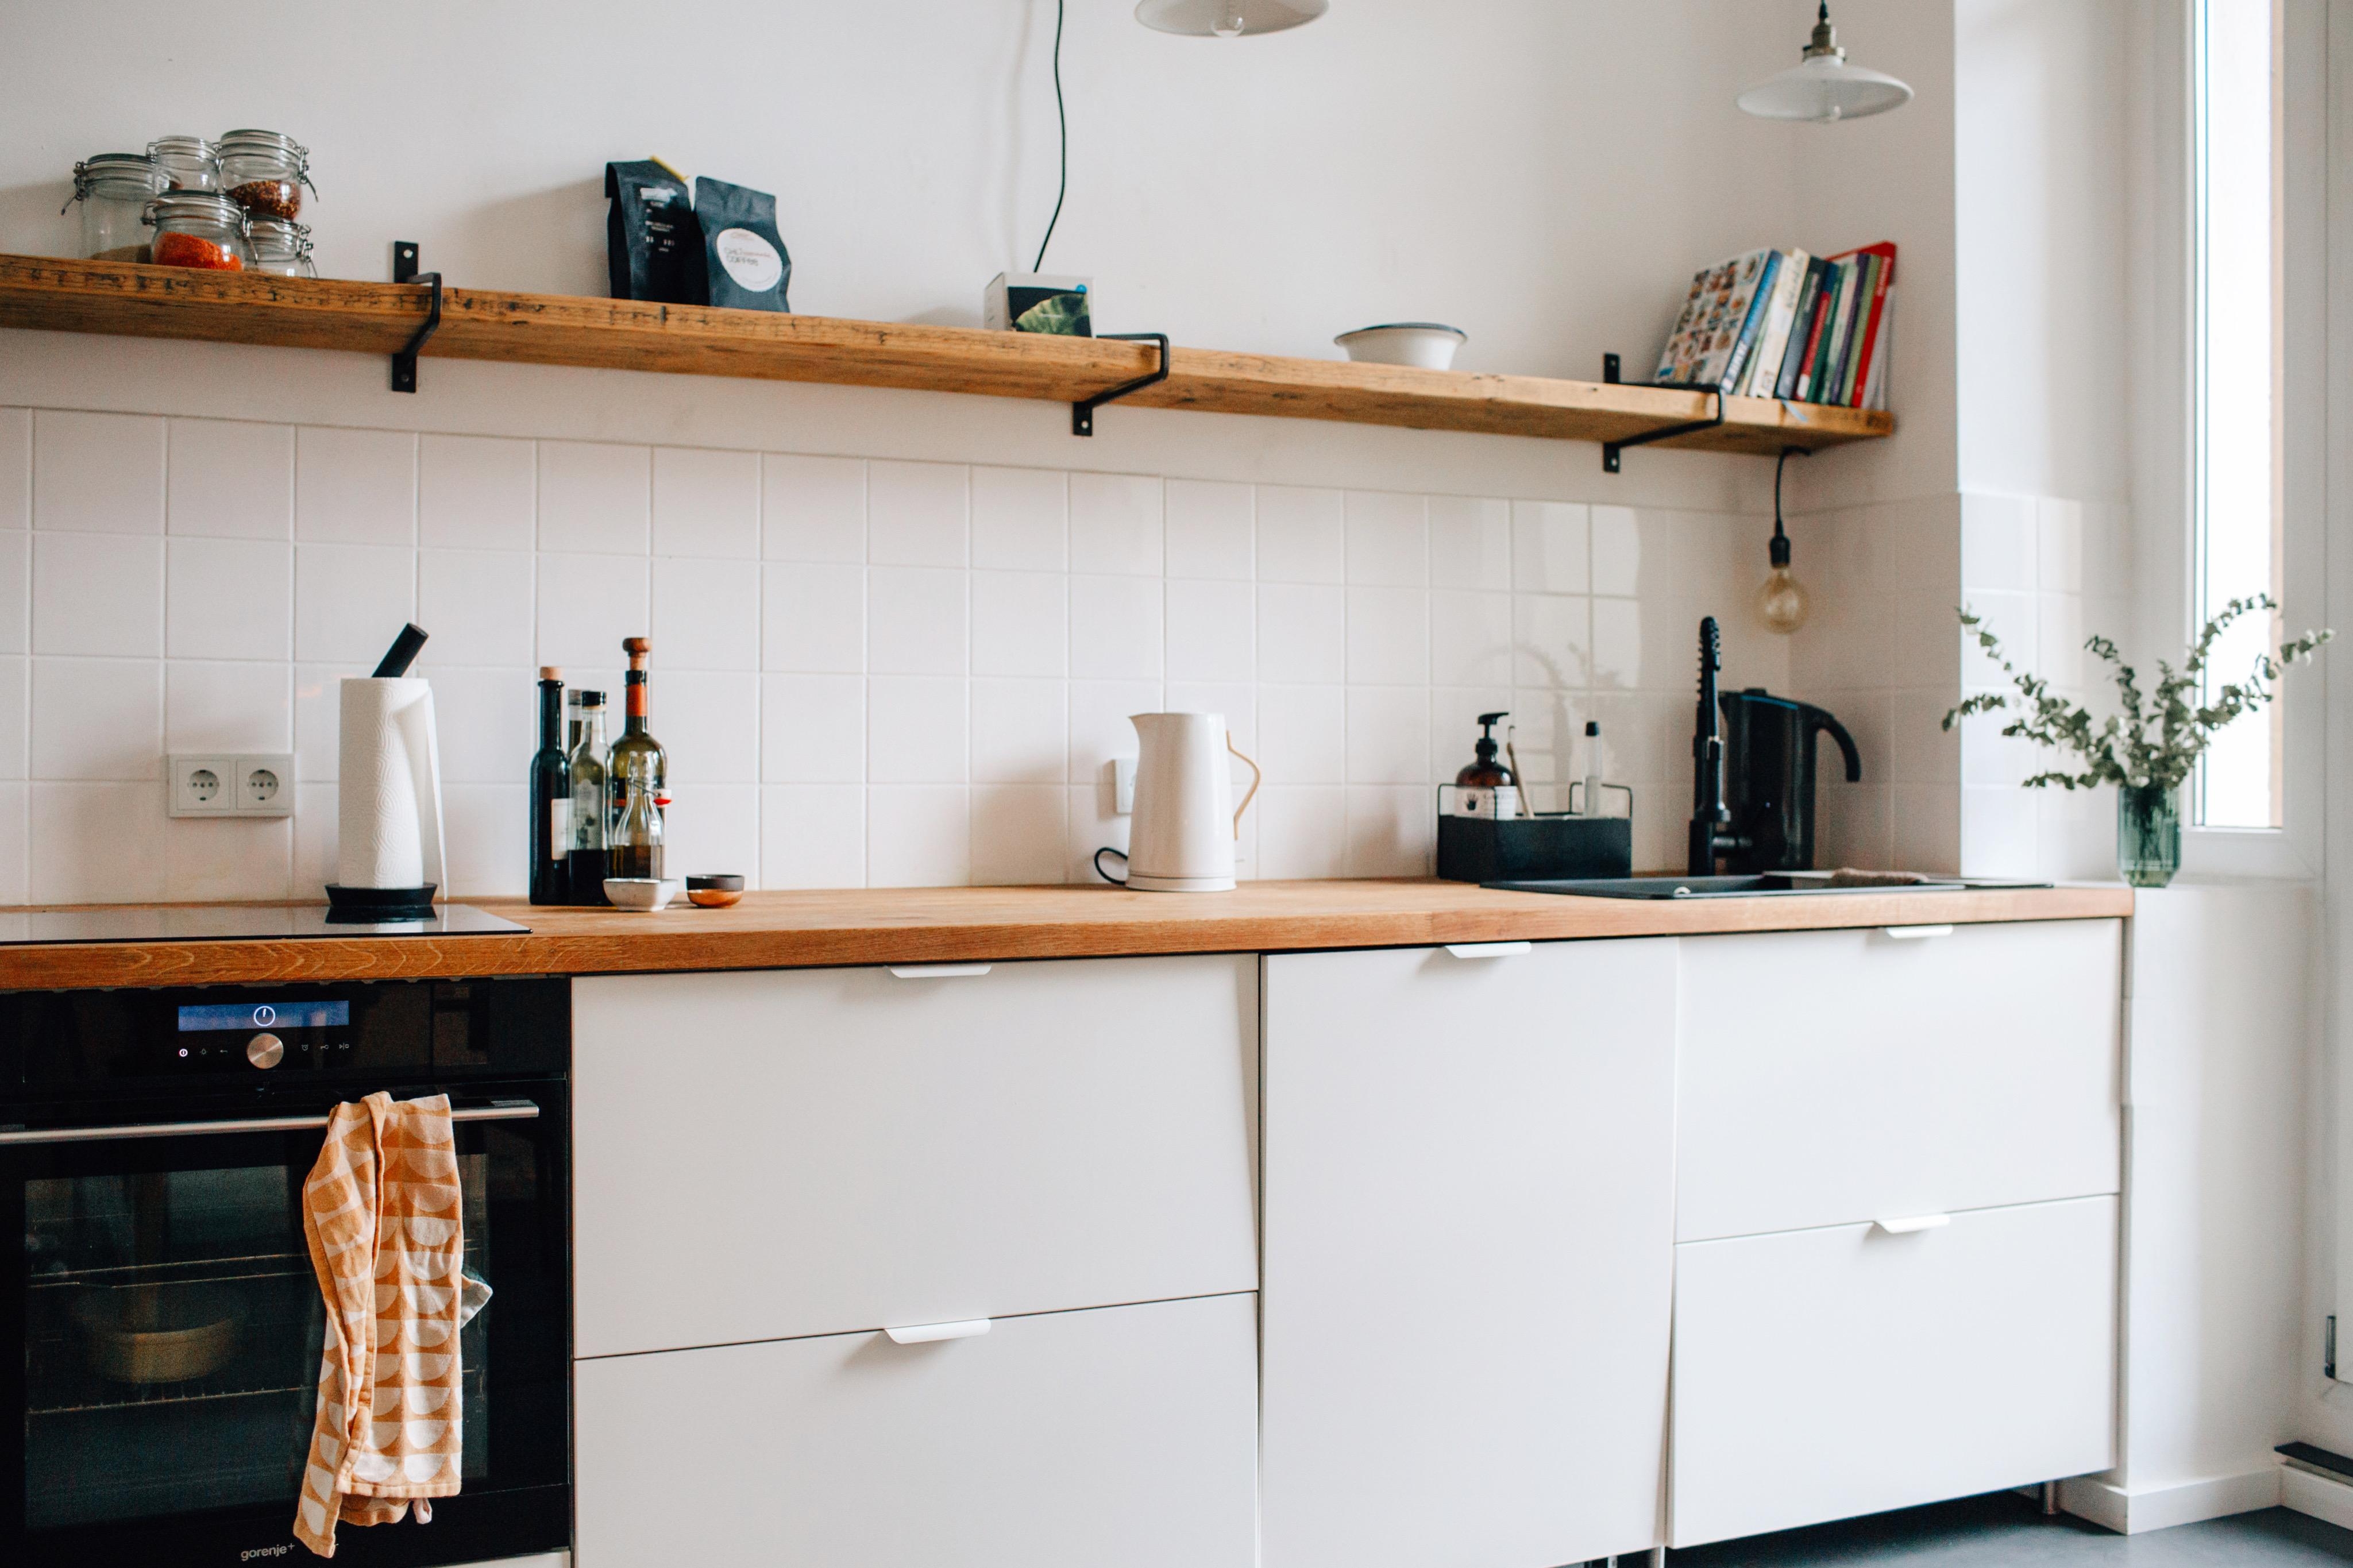 2021 ✨

#kitchen #interior #kitcheninspo #couchmagazin